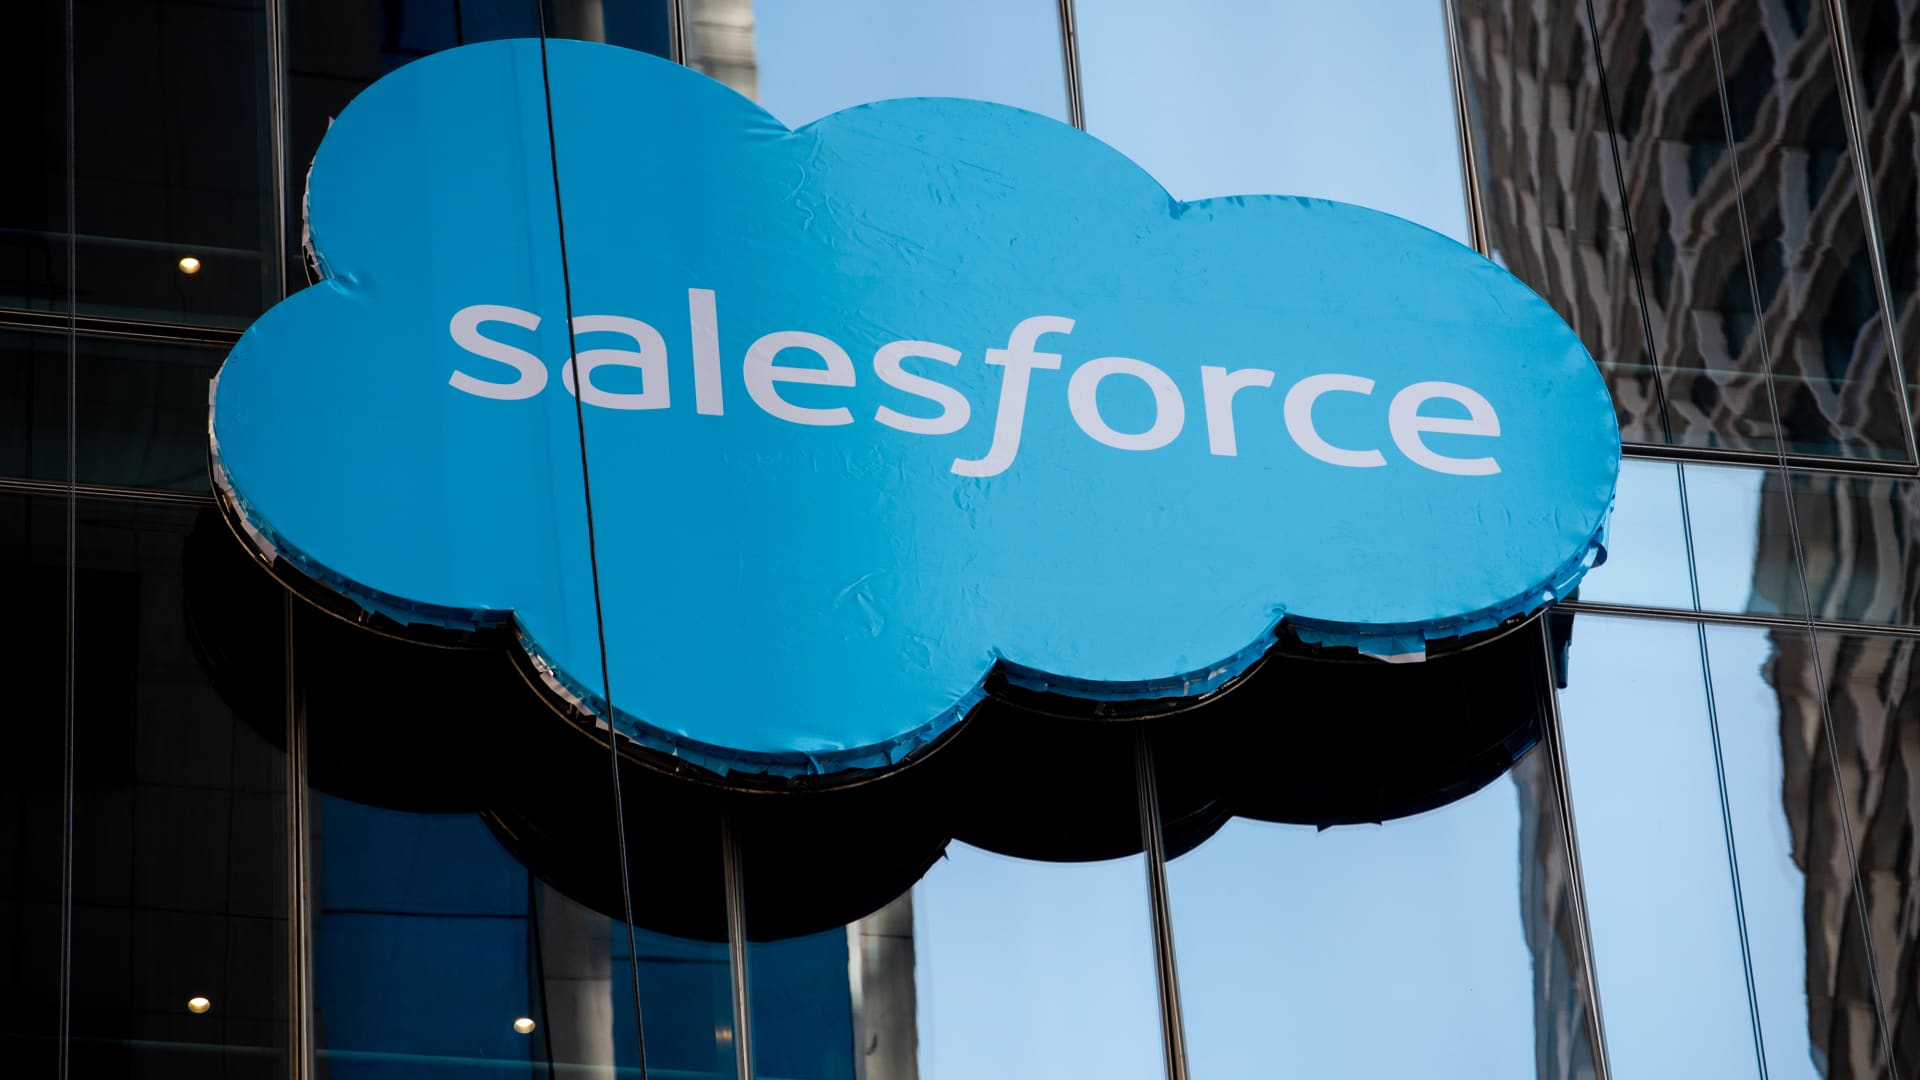 Activist investor Elliott nominates slate of directors to Salesforce board, sources say